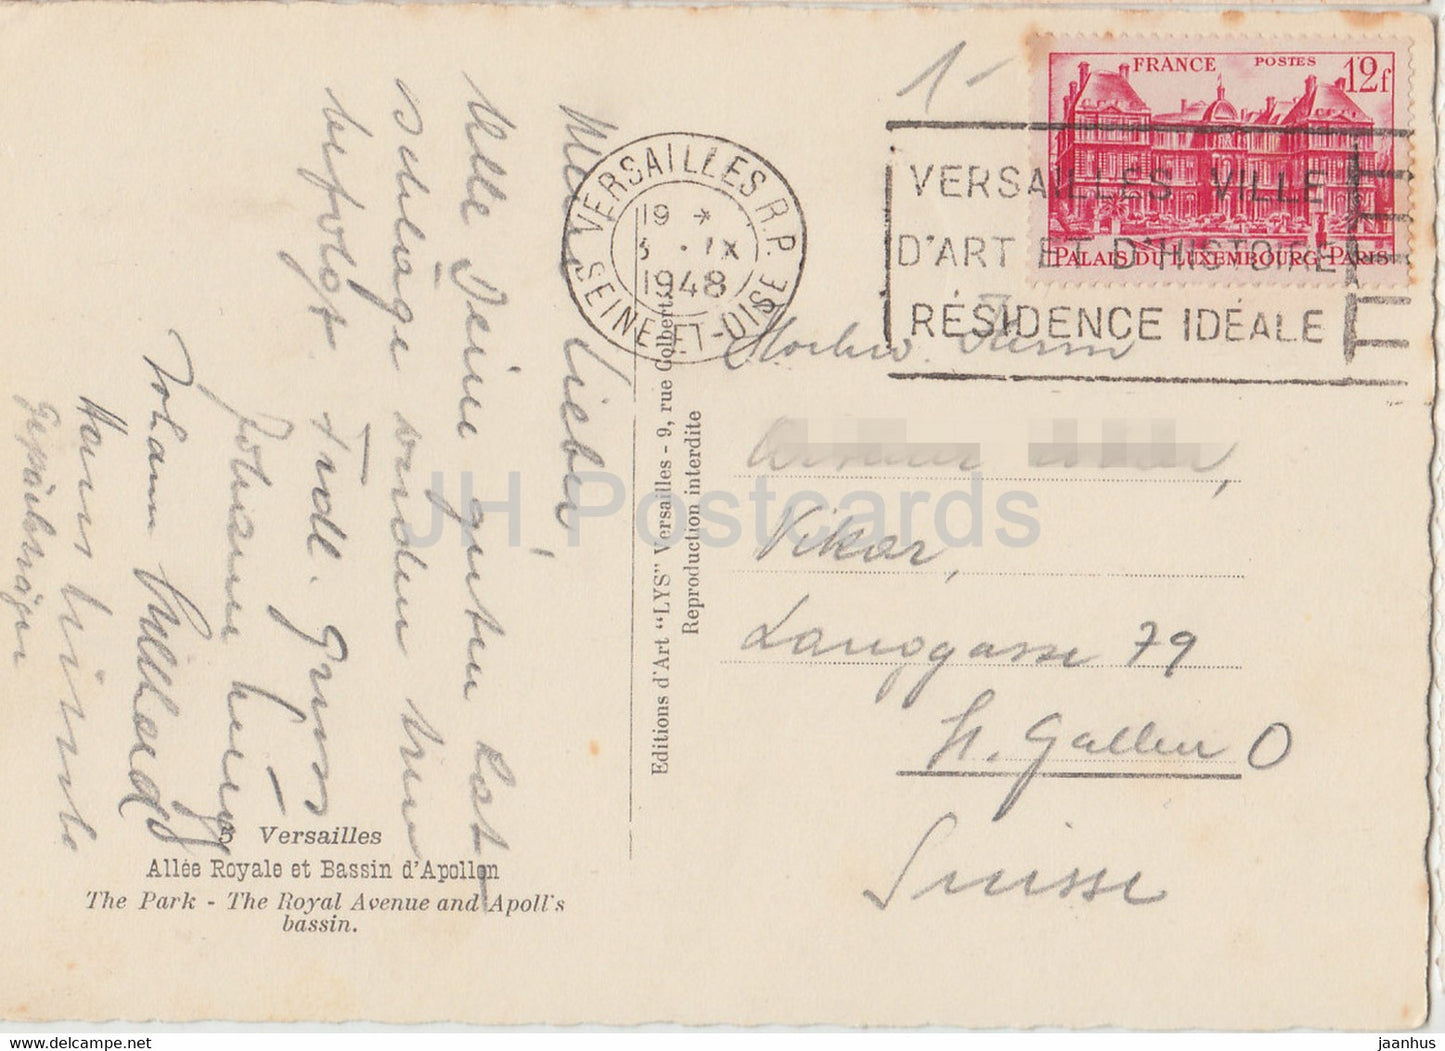 Versailles - Allee Royale et Bassin d'Appolon - The Park - Royal Avenue - old postcard - 1948 - France - used